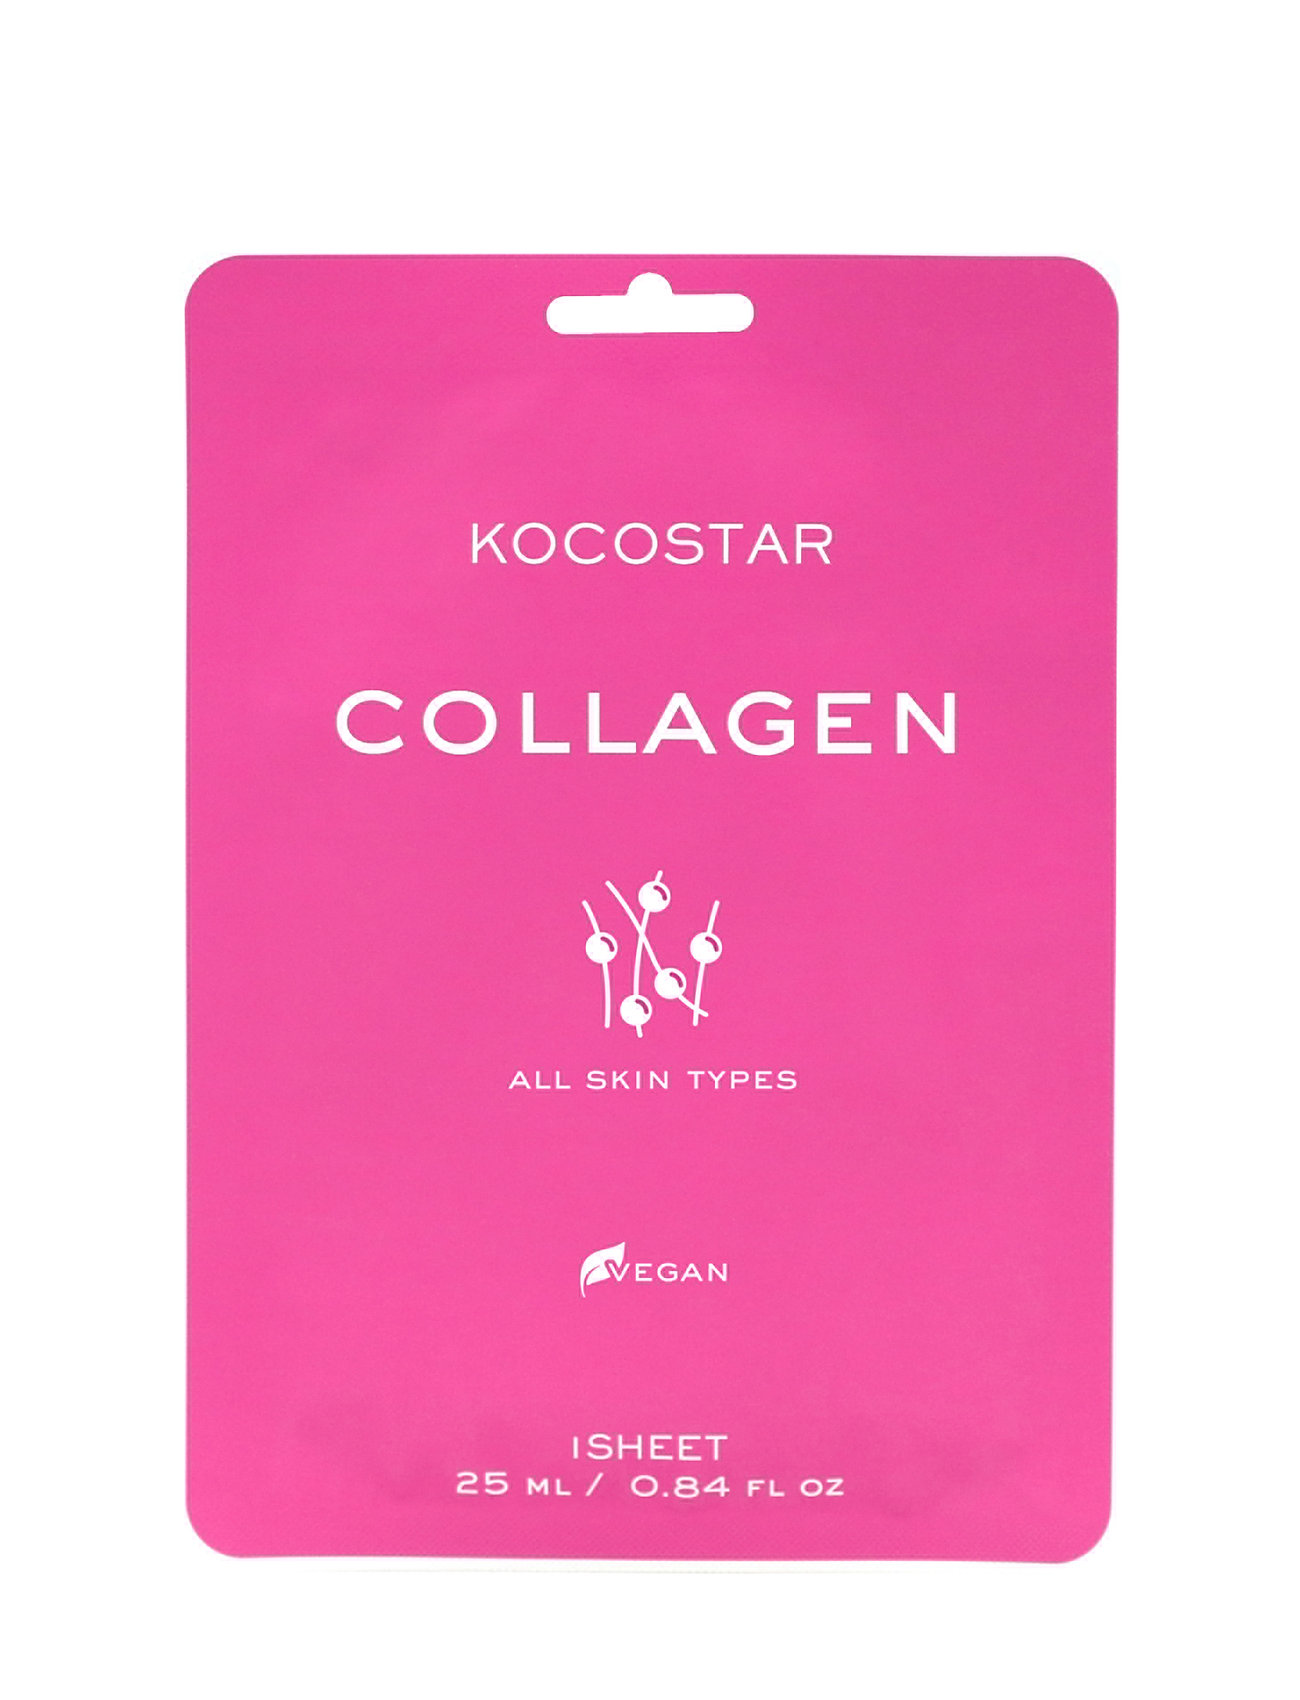 Kocostar Collagen Mask Sheet Beauty Women Skin Care Face Masks Sheetmask Nude KOCOSTAR